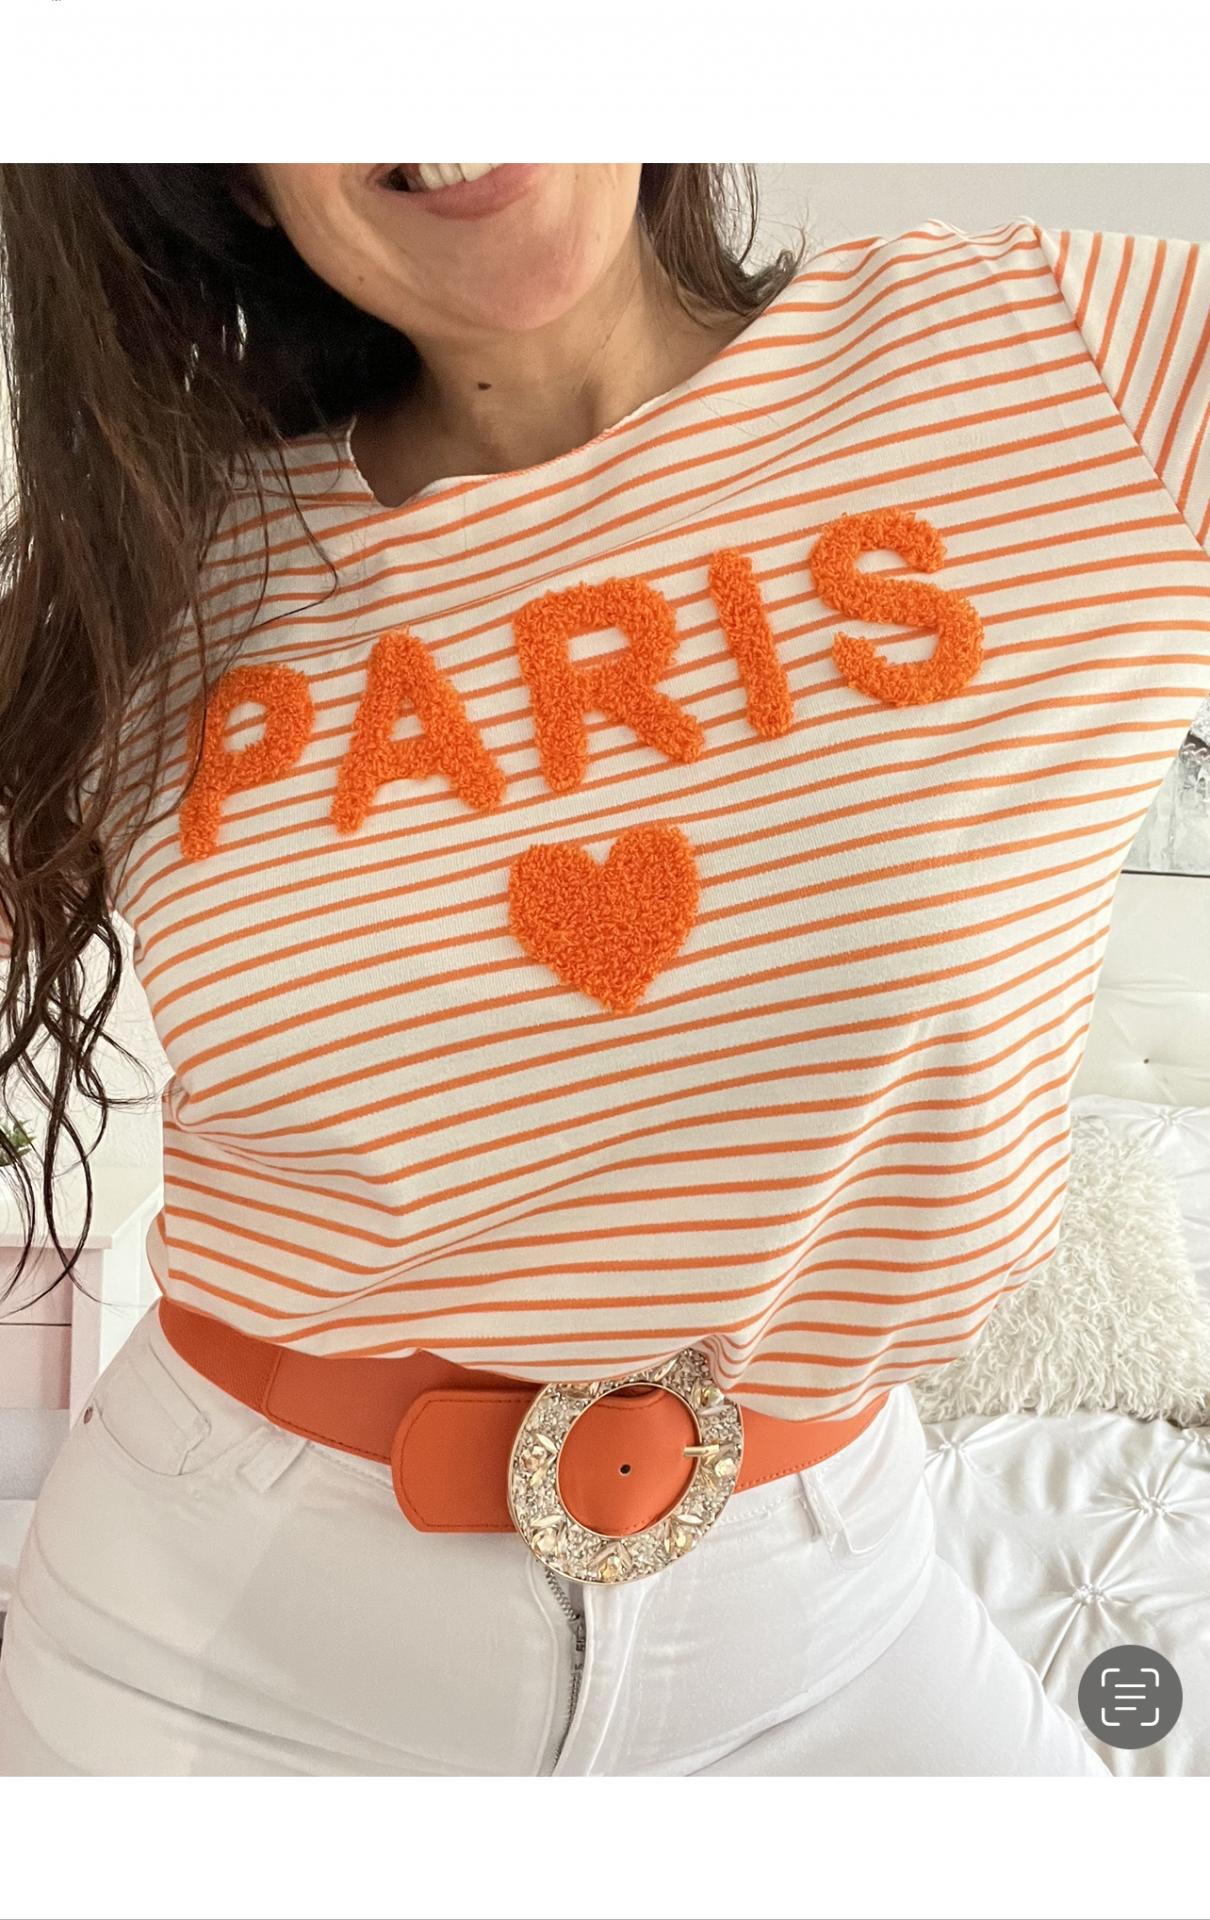 Camiseta PARIS naranja